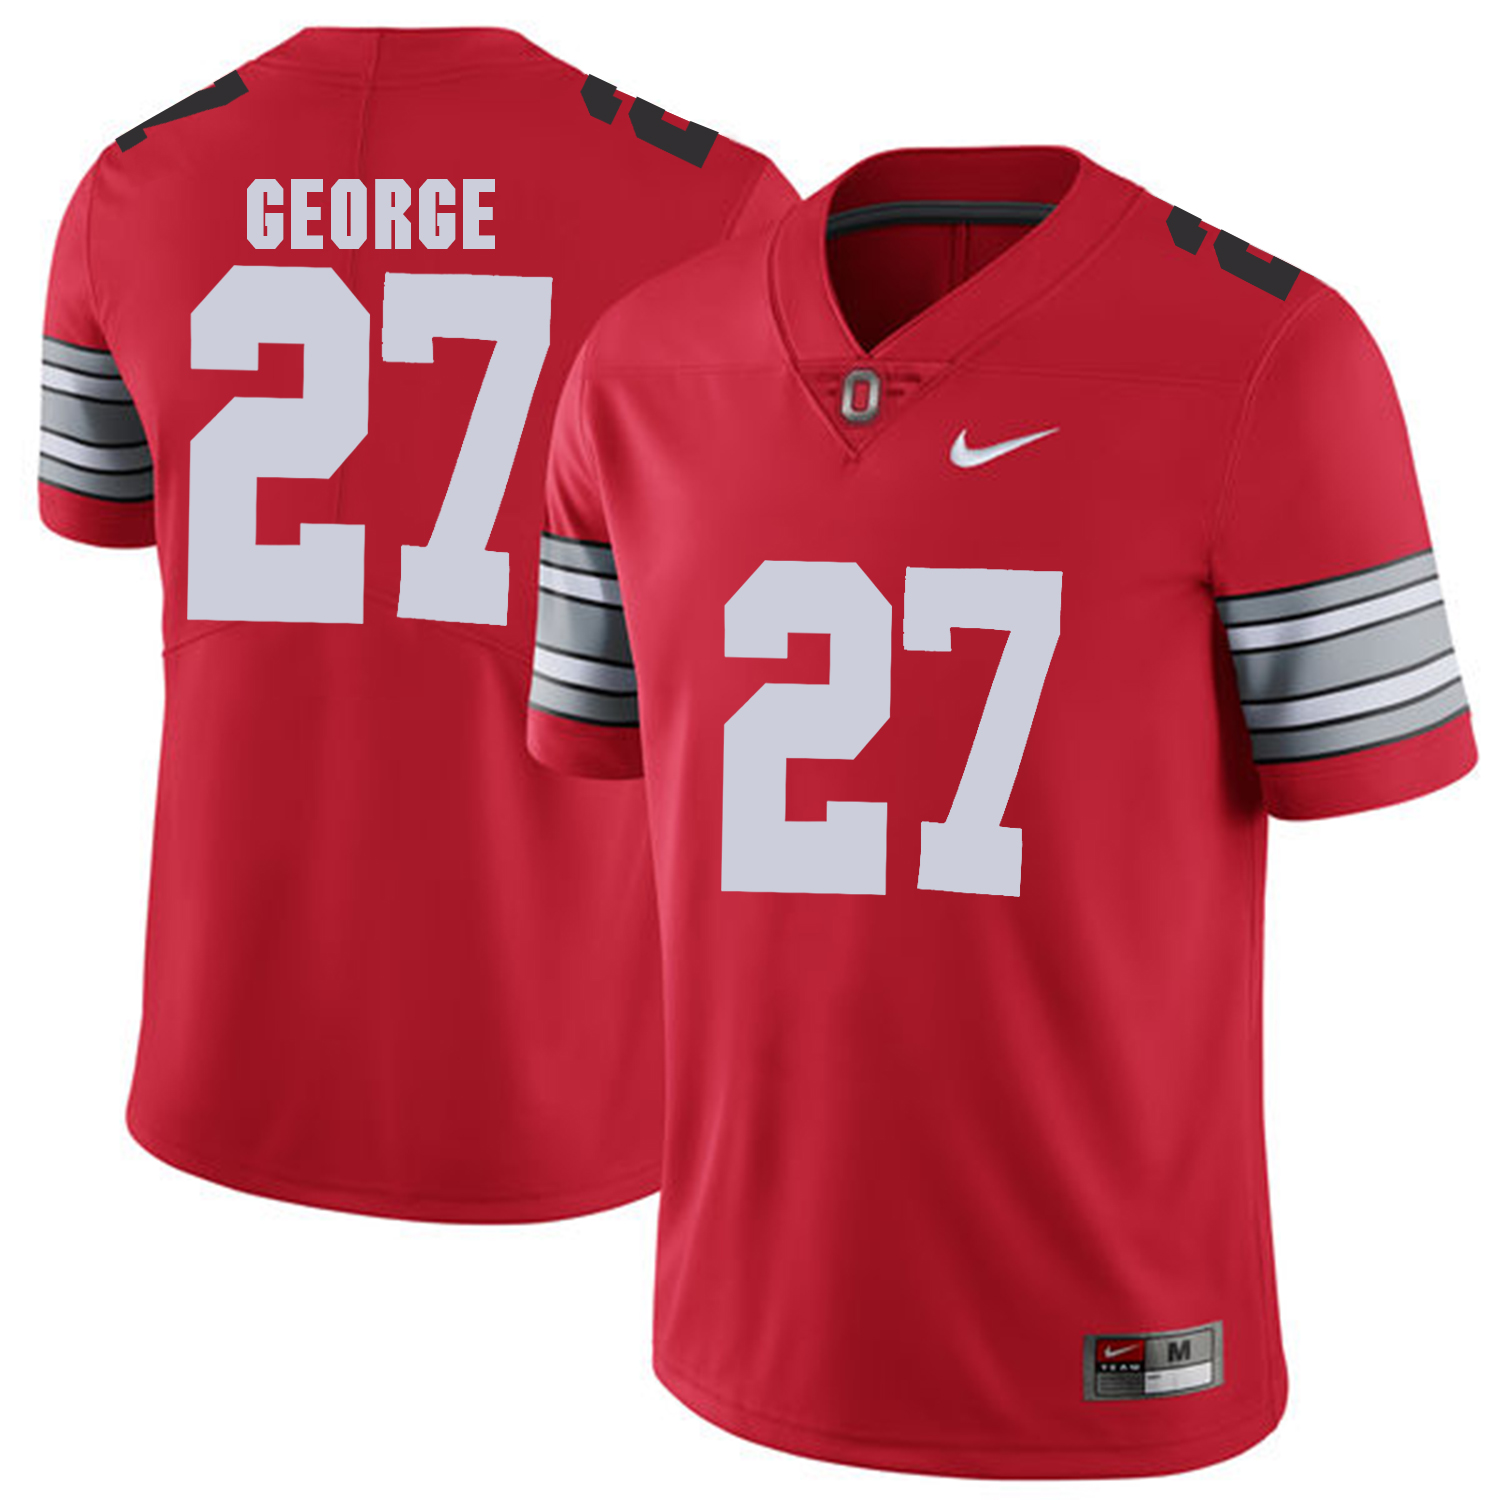 Men Ohio State 27 George Red Customized NCAA Jerseys